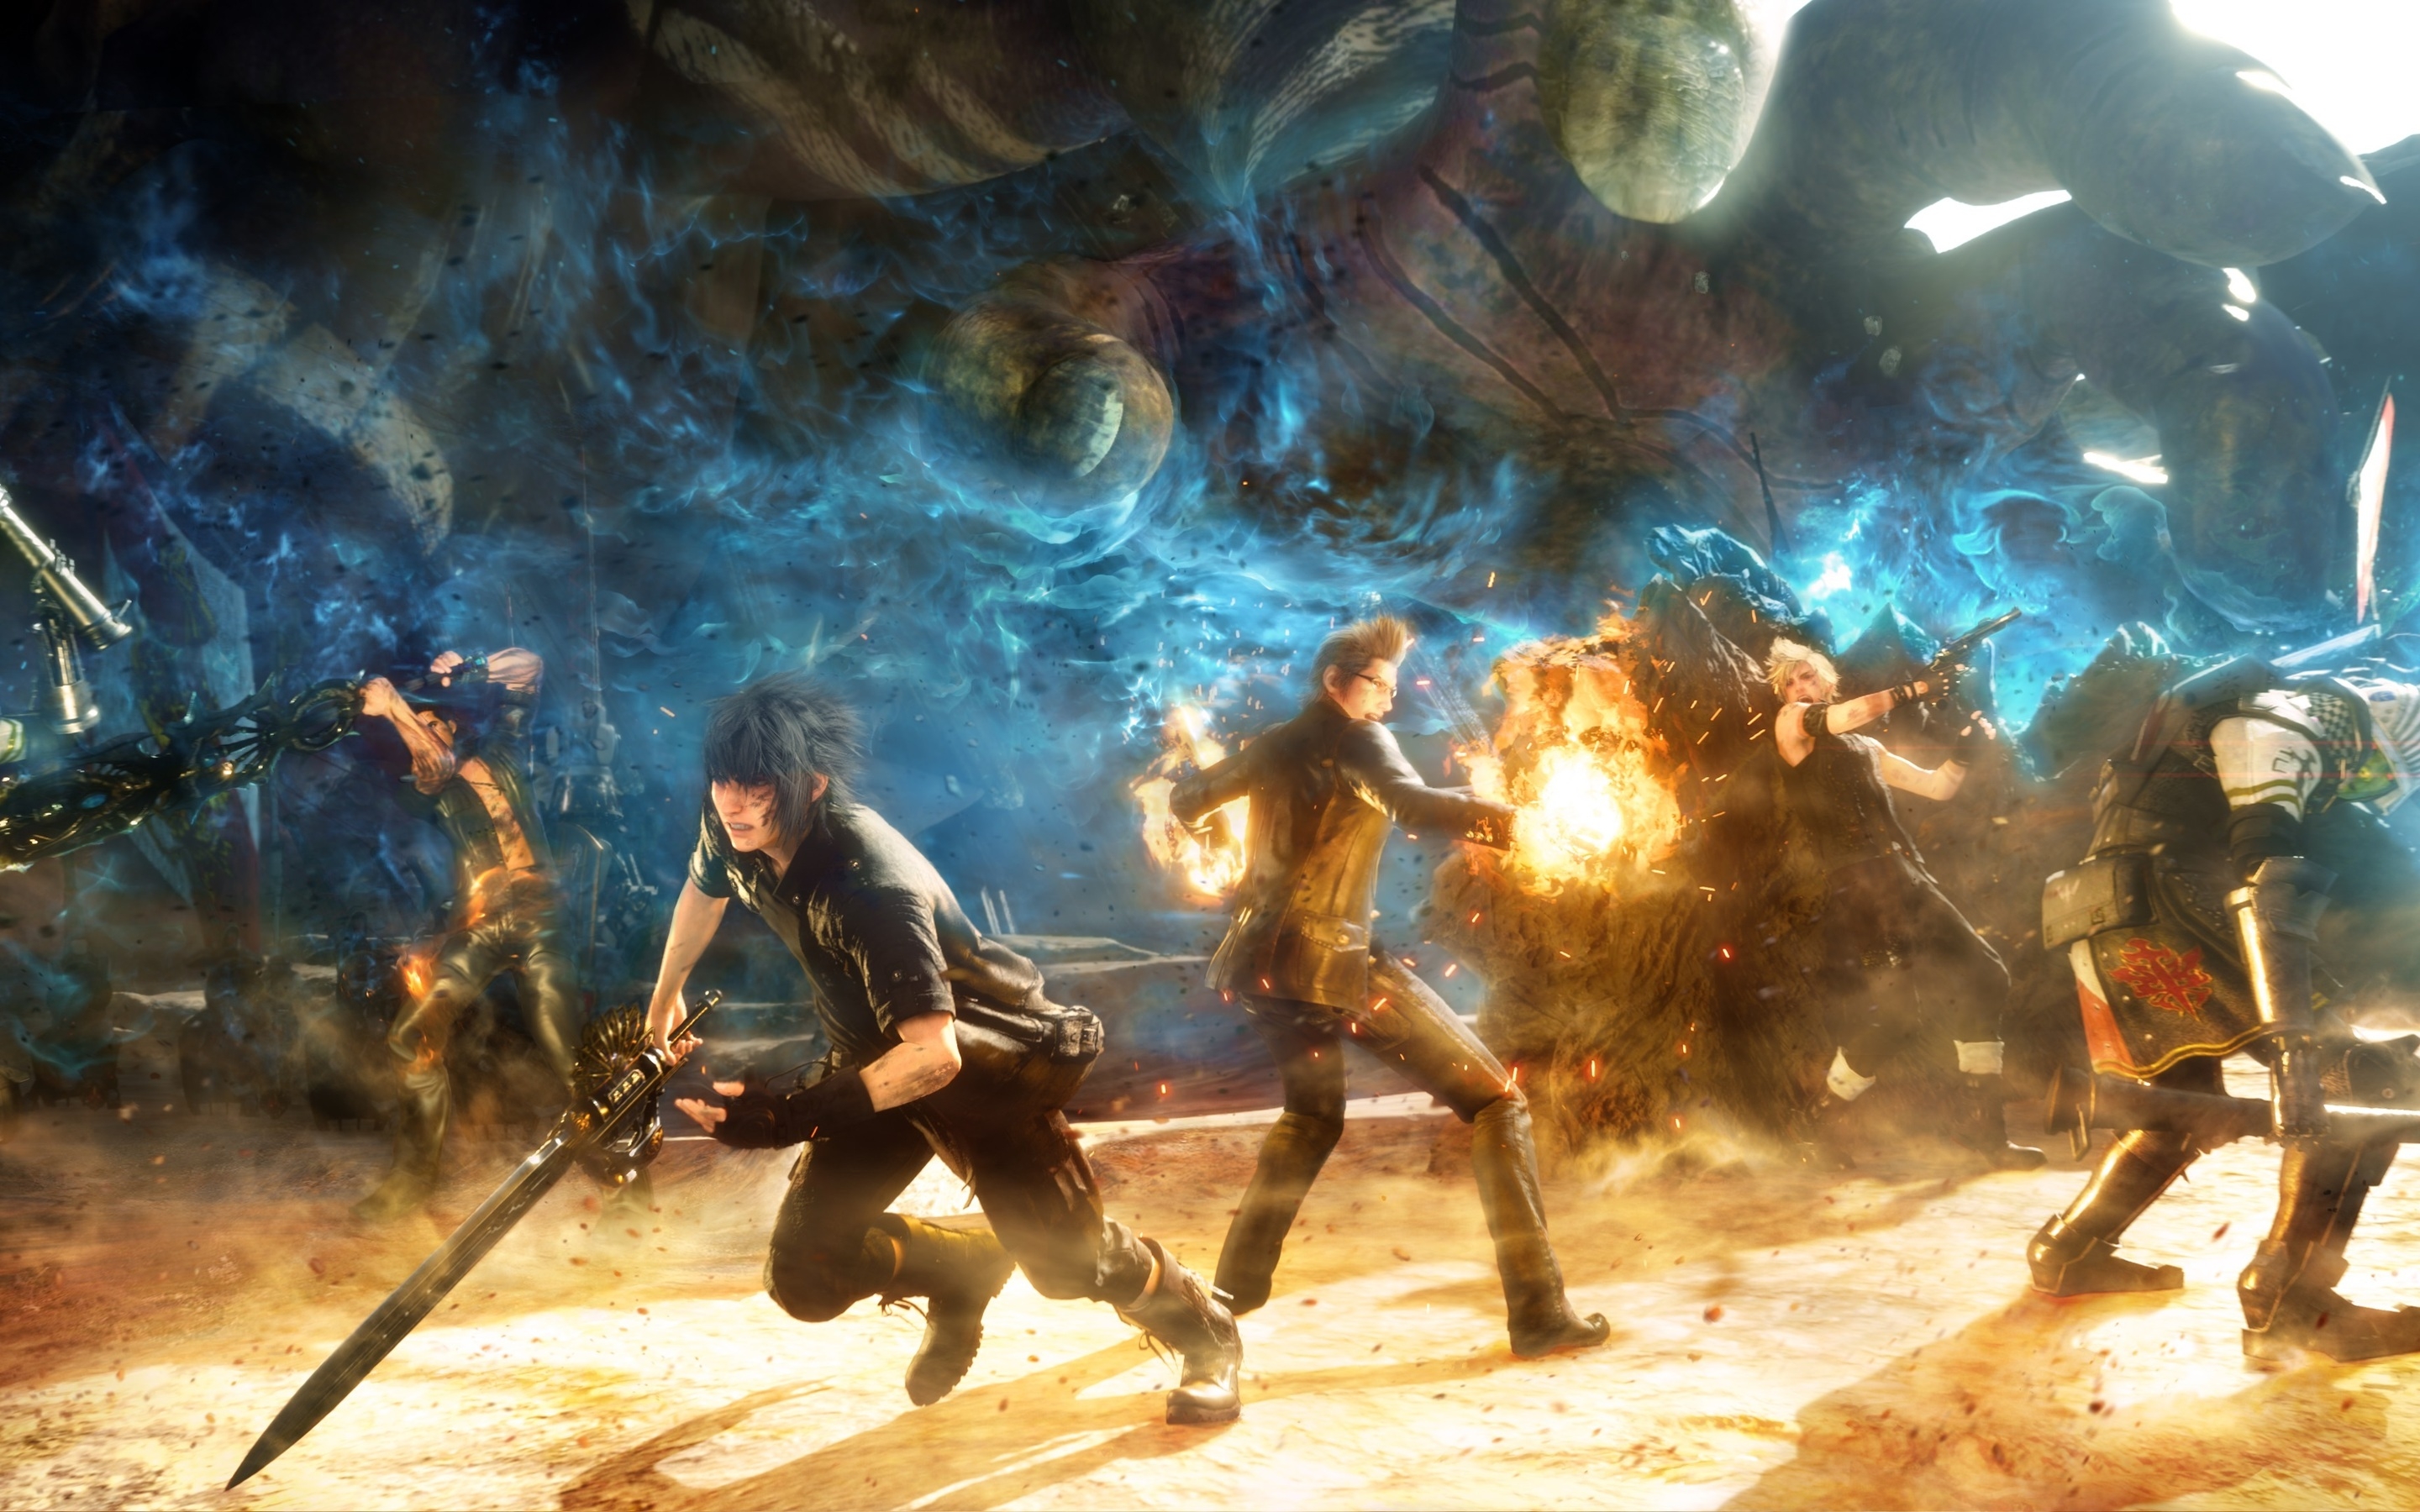 Final Fantasy V Battle for 2880 x 1800 Retina Display resolution